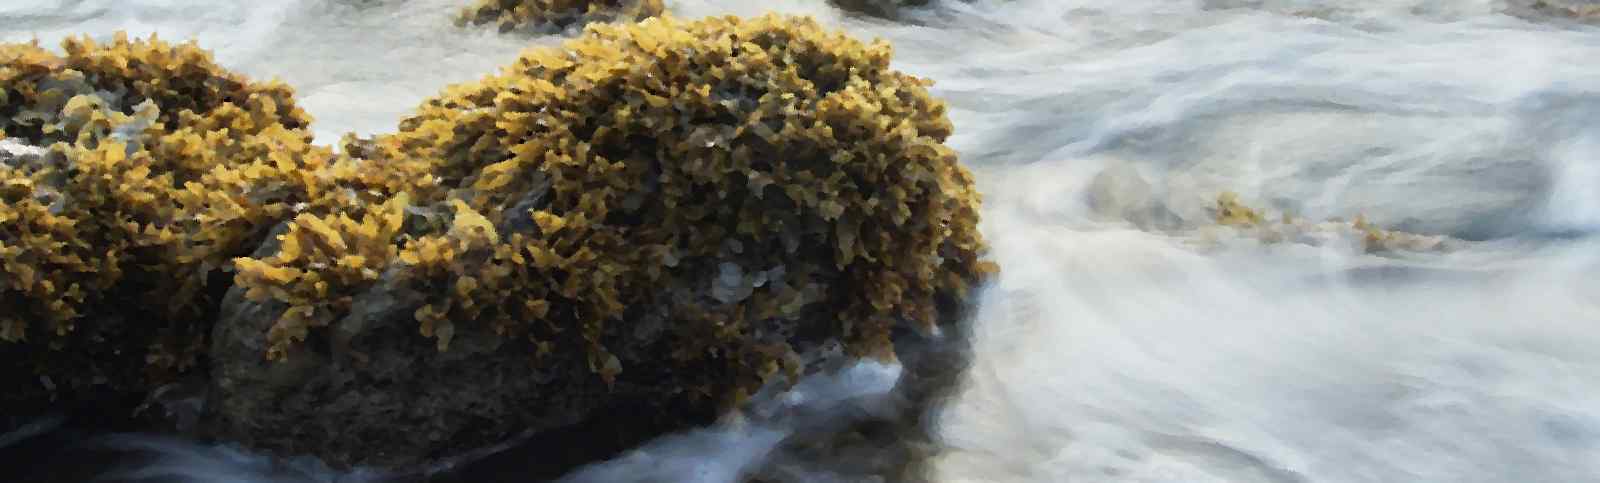 Wakame: The Slimy Seaweed That Will Slim Your Waistline!